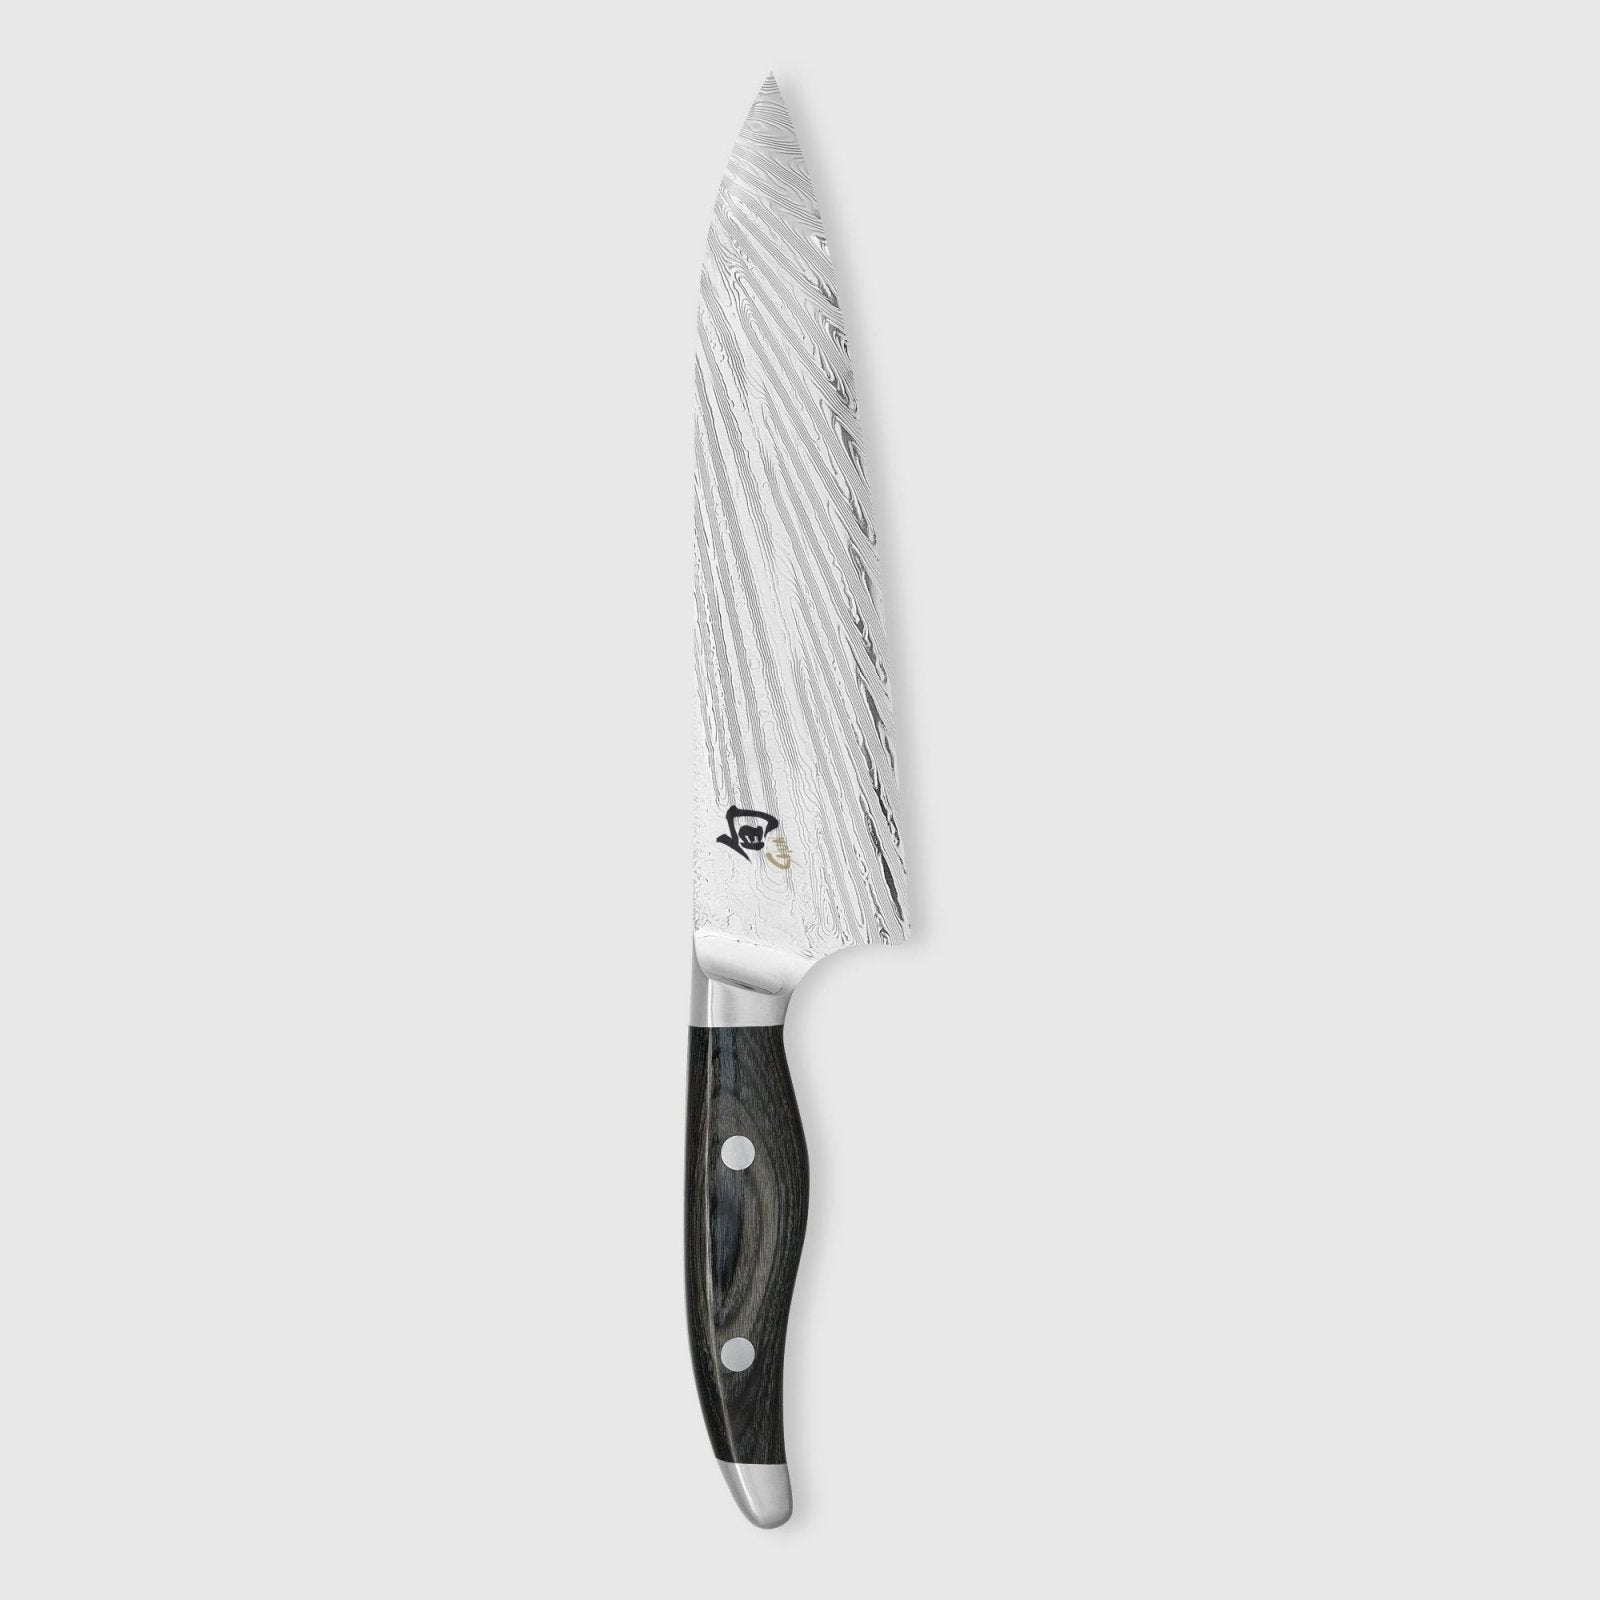 KAI Shun Nagare 20cm Chefs Knife - KAI-NDC-0706 - The Cotswold Knife Company